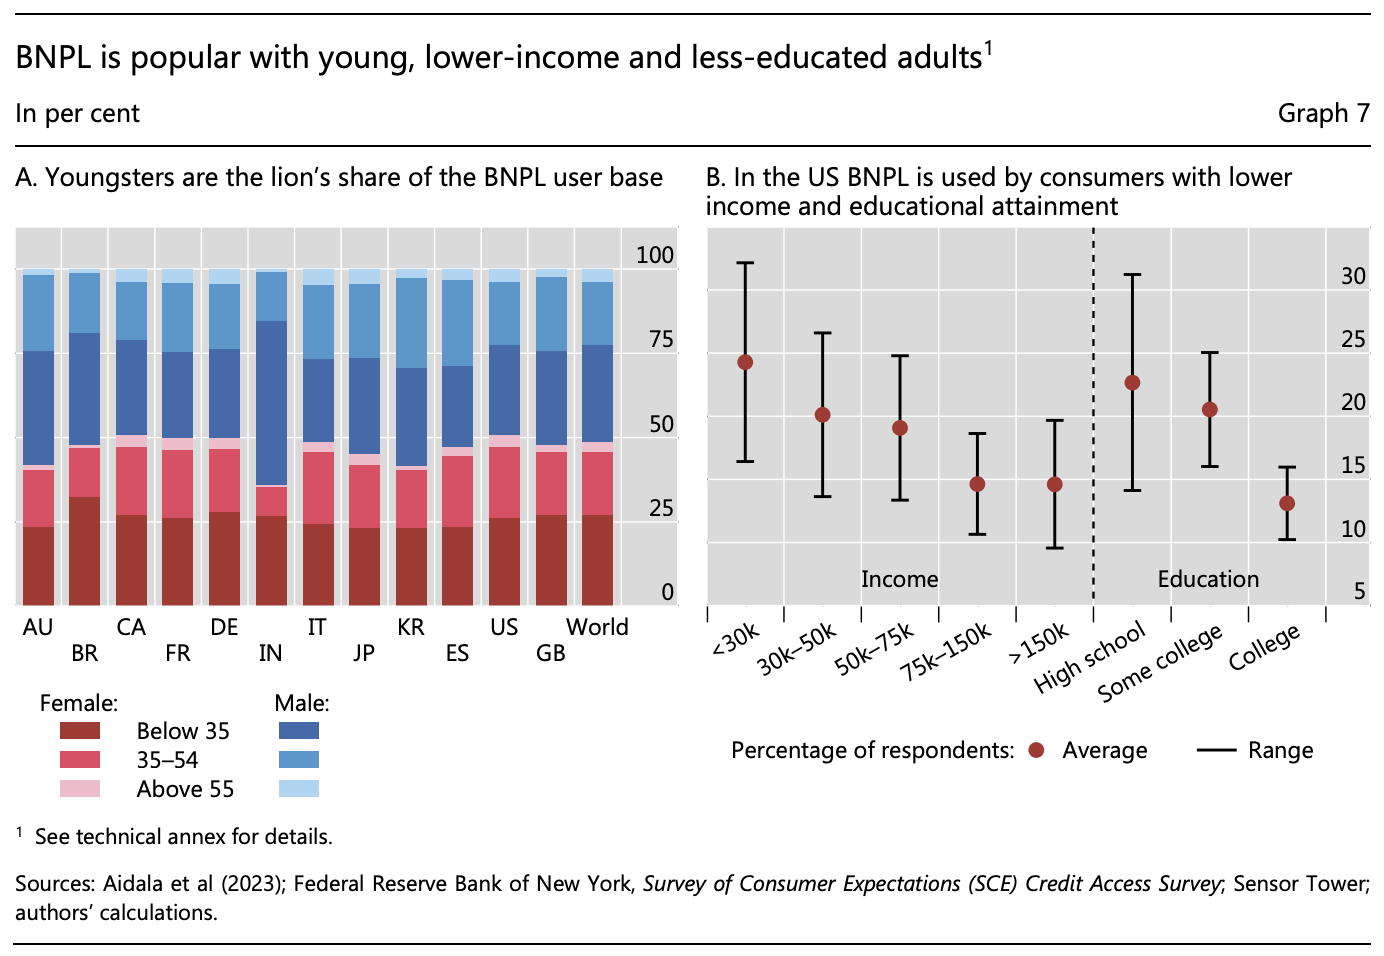 BNPL פופולרי בקרב מבוגרים צעירים, בעלי הכנסה נמוכה ופחות משכילים, מקור: קנה עכשיו, שלם מאוחר יותר: ניתוח חוצה מדינות, Bank for International Settlements, דצמבר 2023